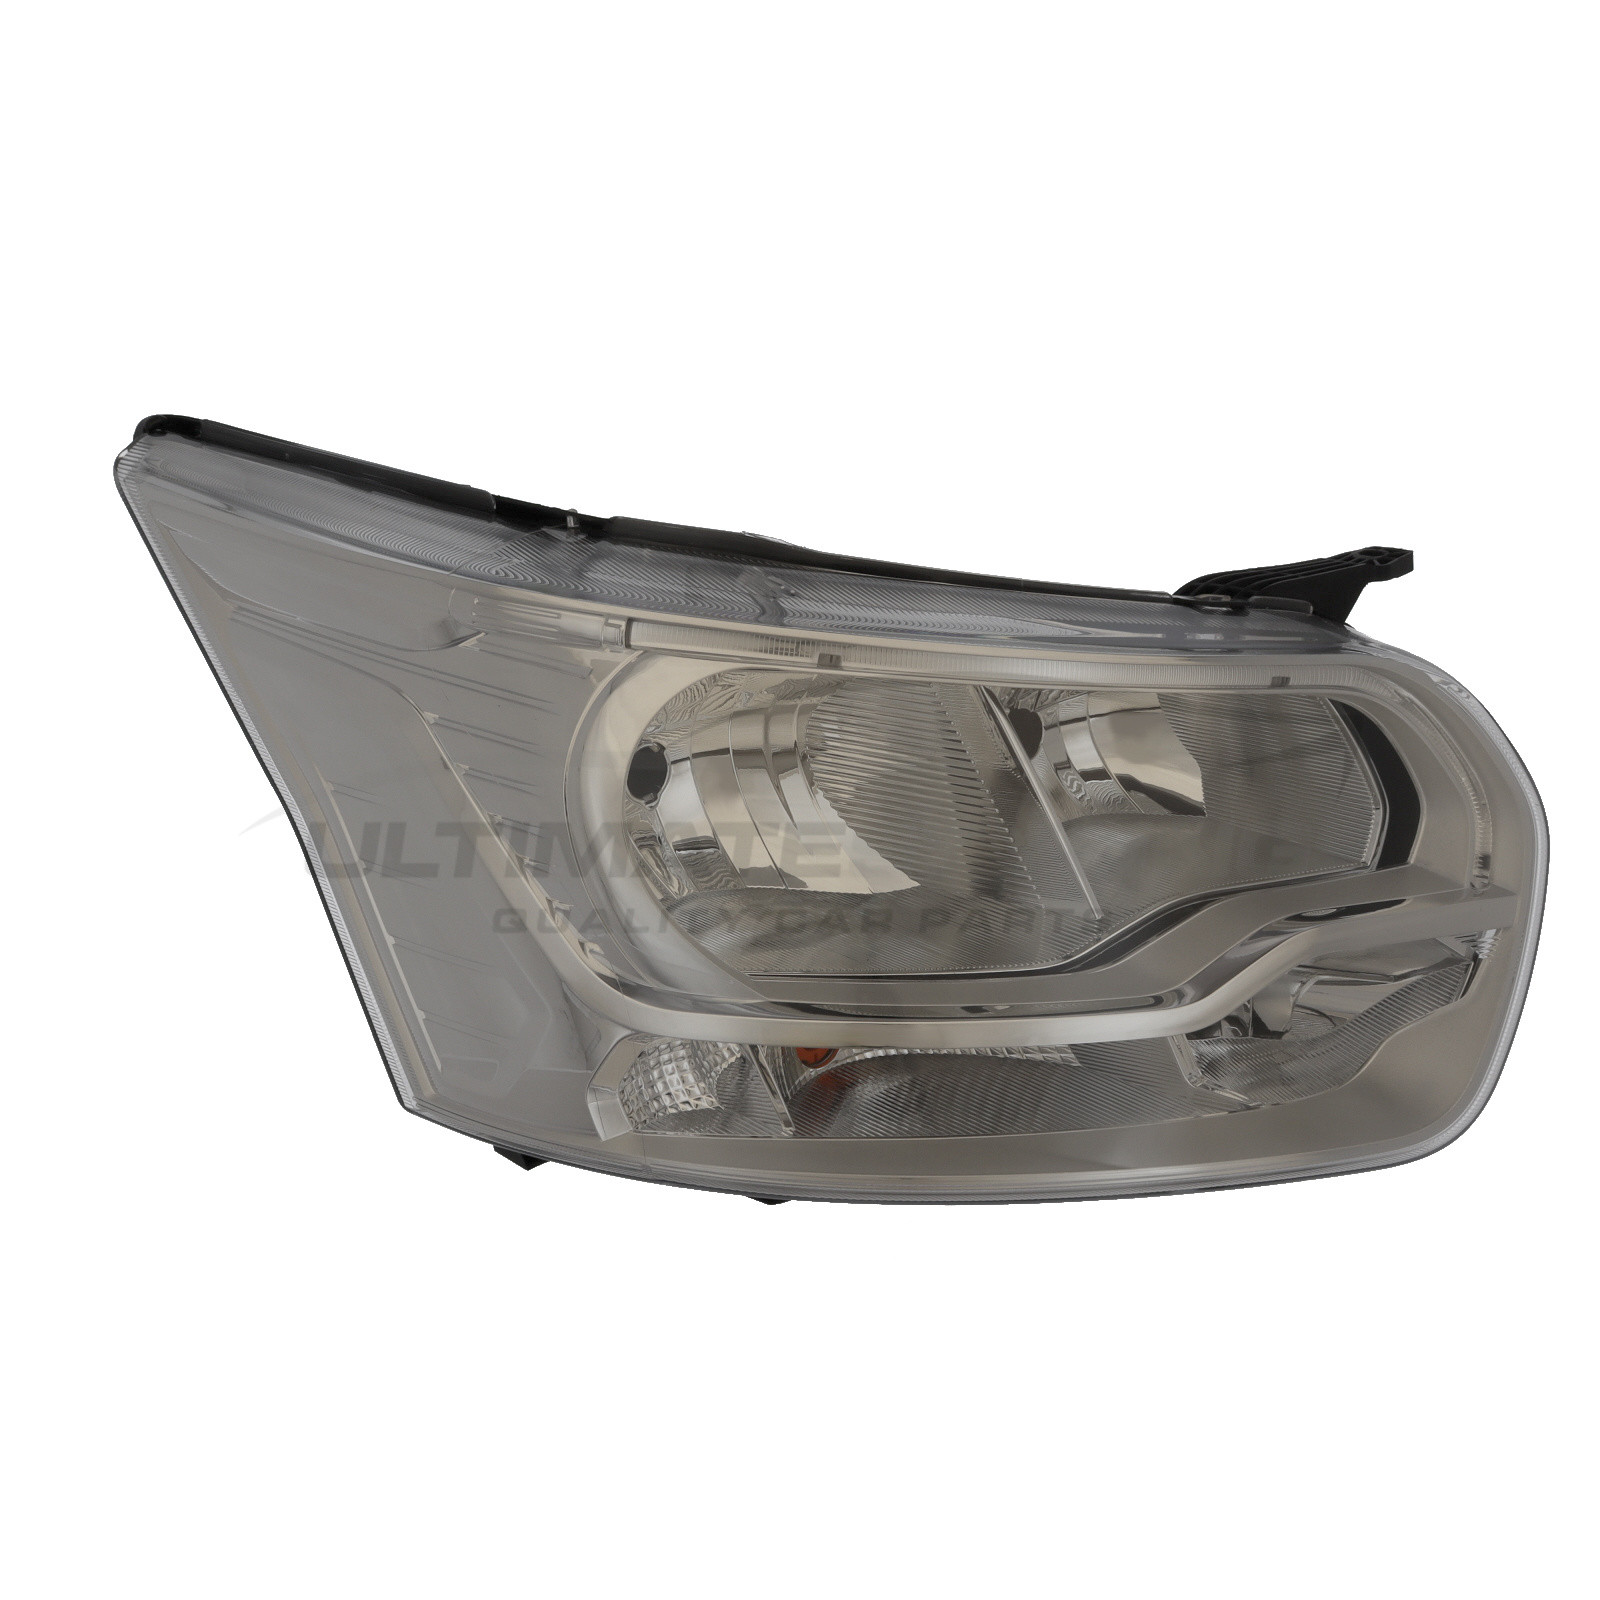 Headlight / Headlamp for Ford Transit